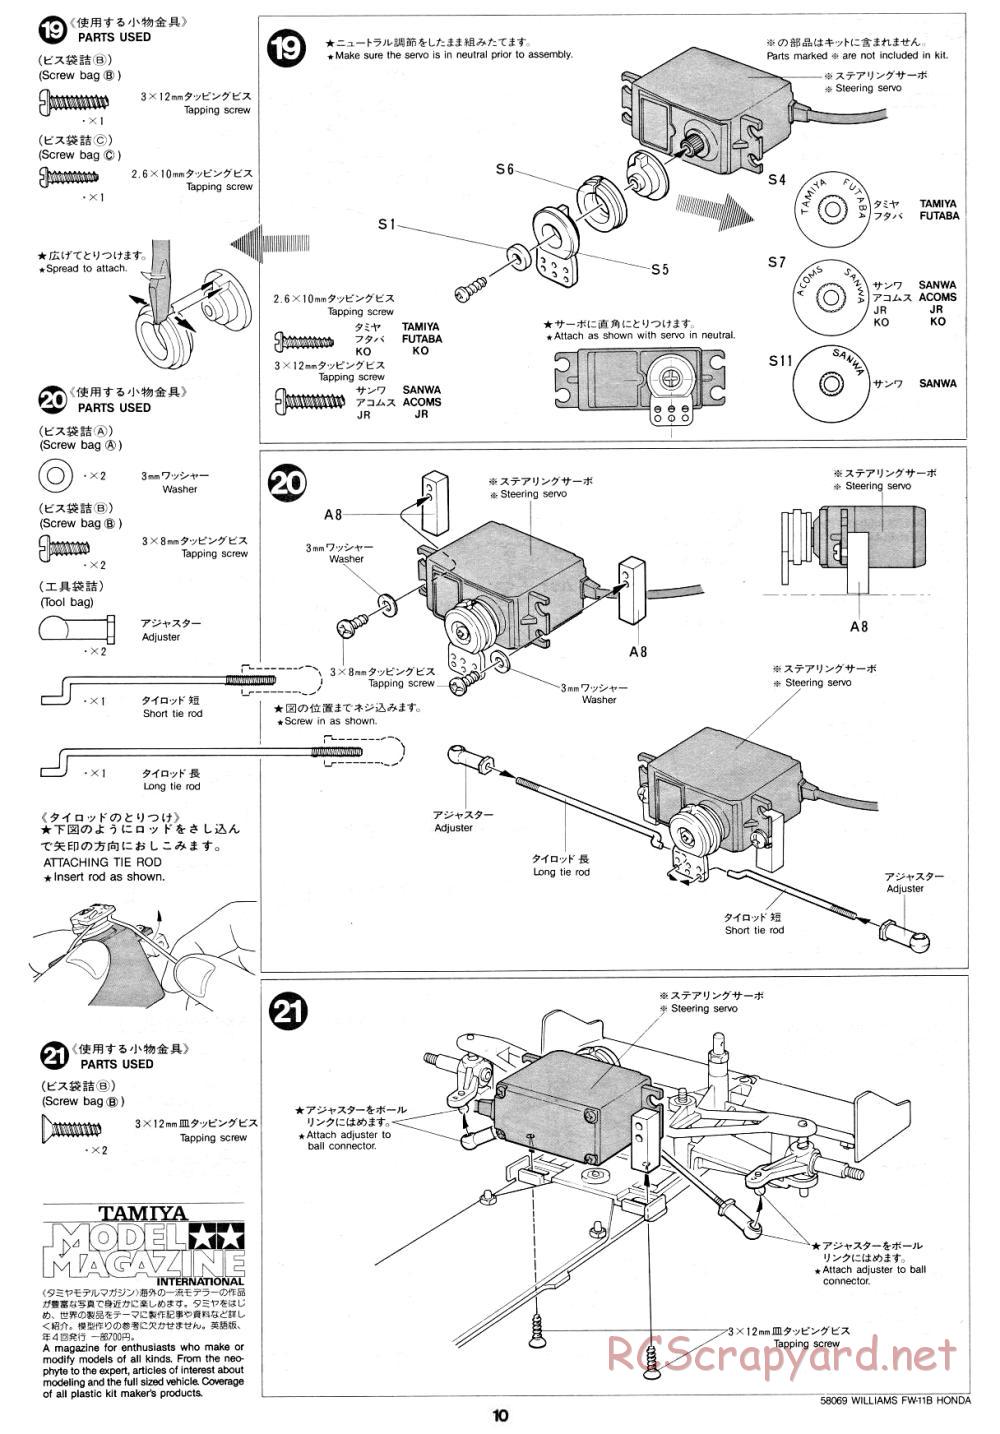 Tamiya - Williams FW-11B Honda F1 - 58069 - Manual - Page 10